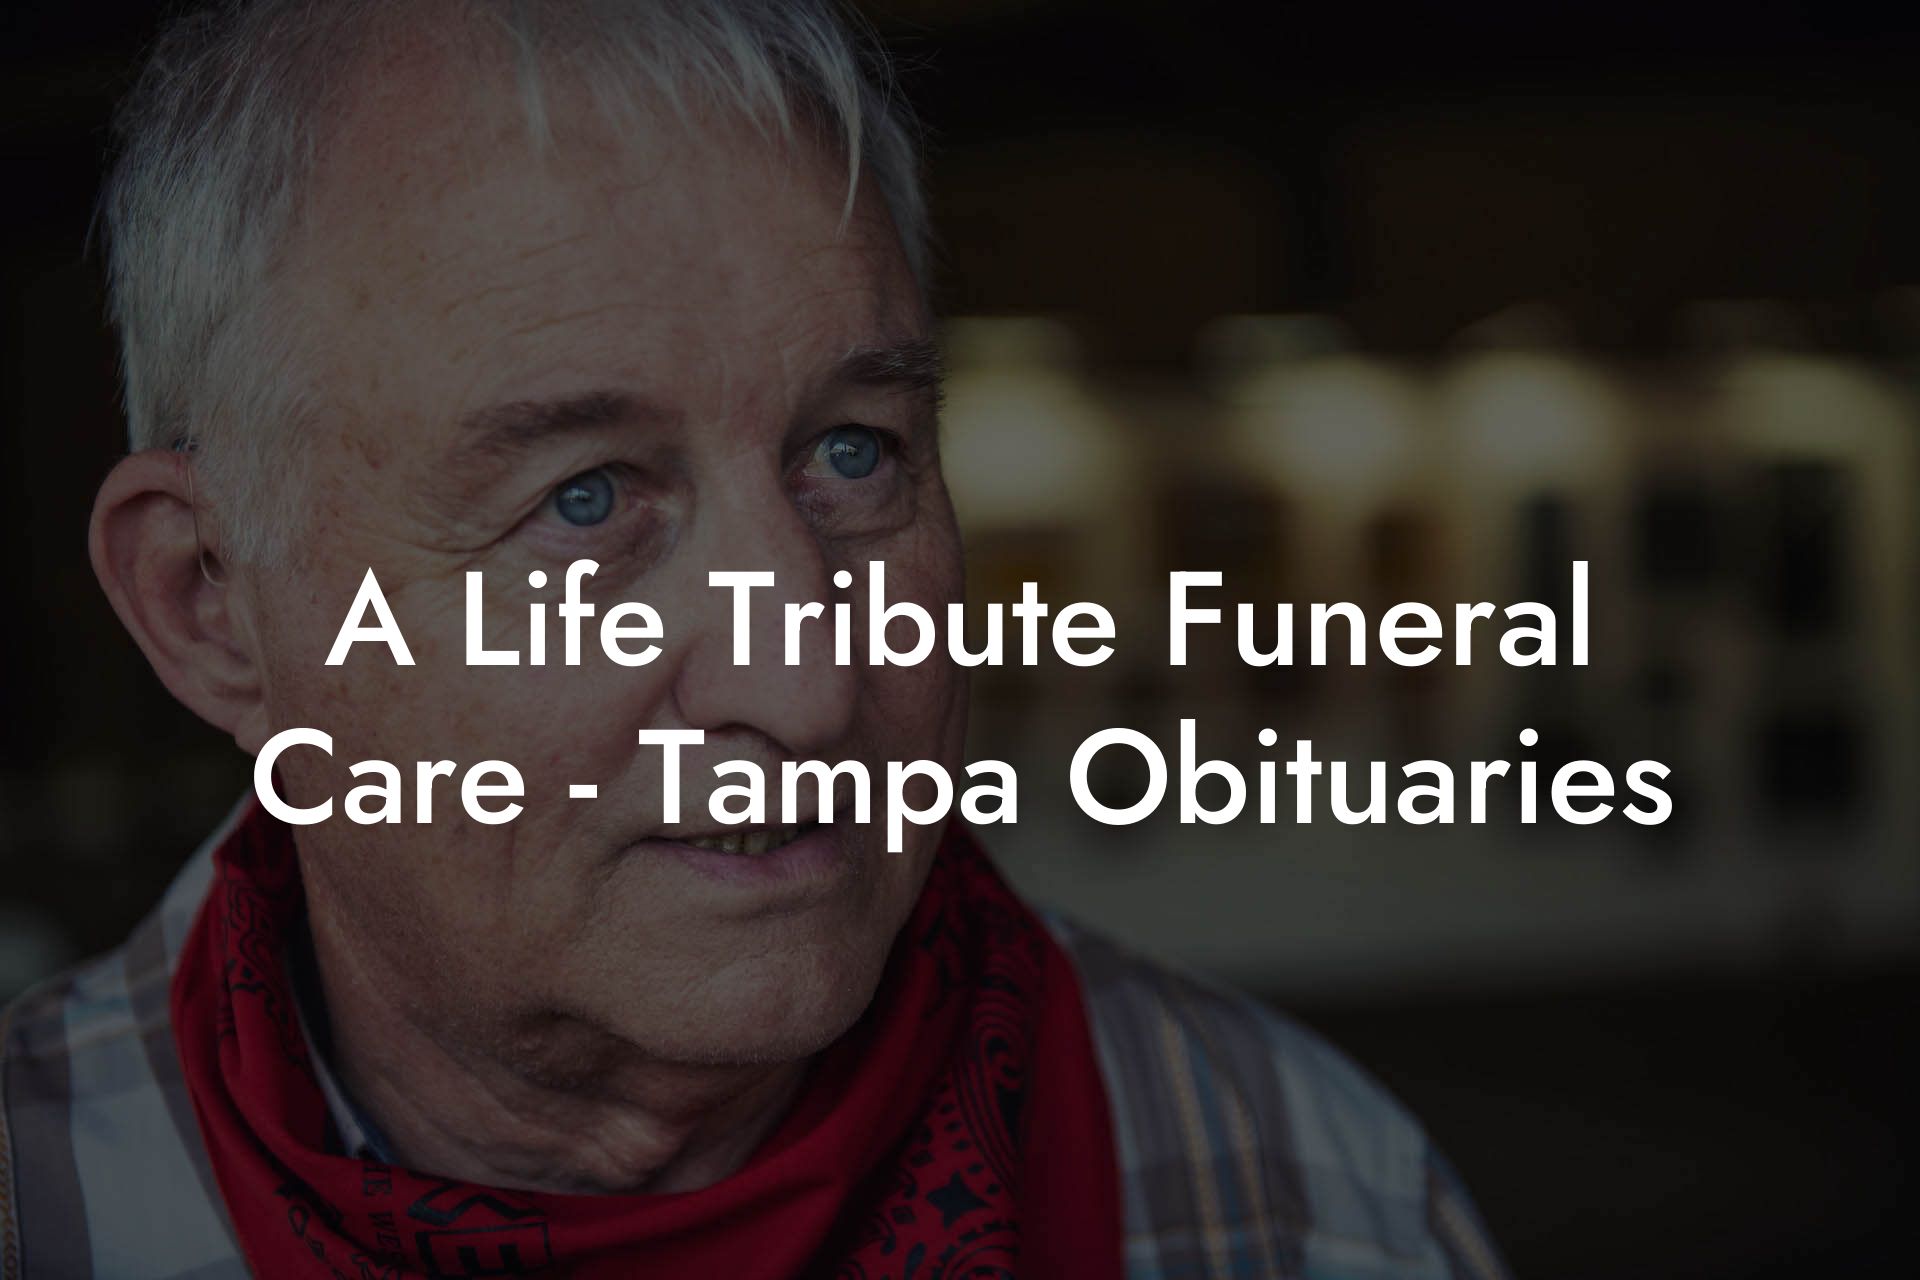 A Life Tribute Funeral Care - Tampa Obituaries